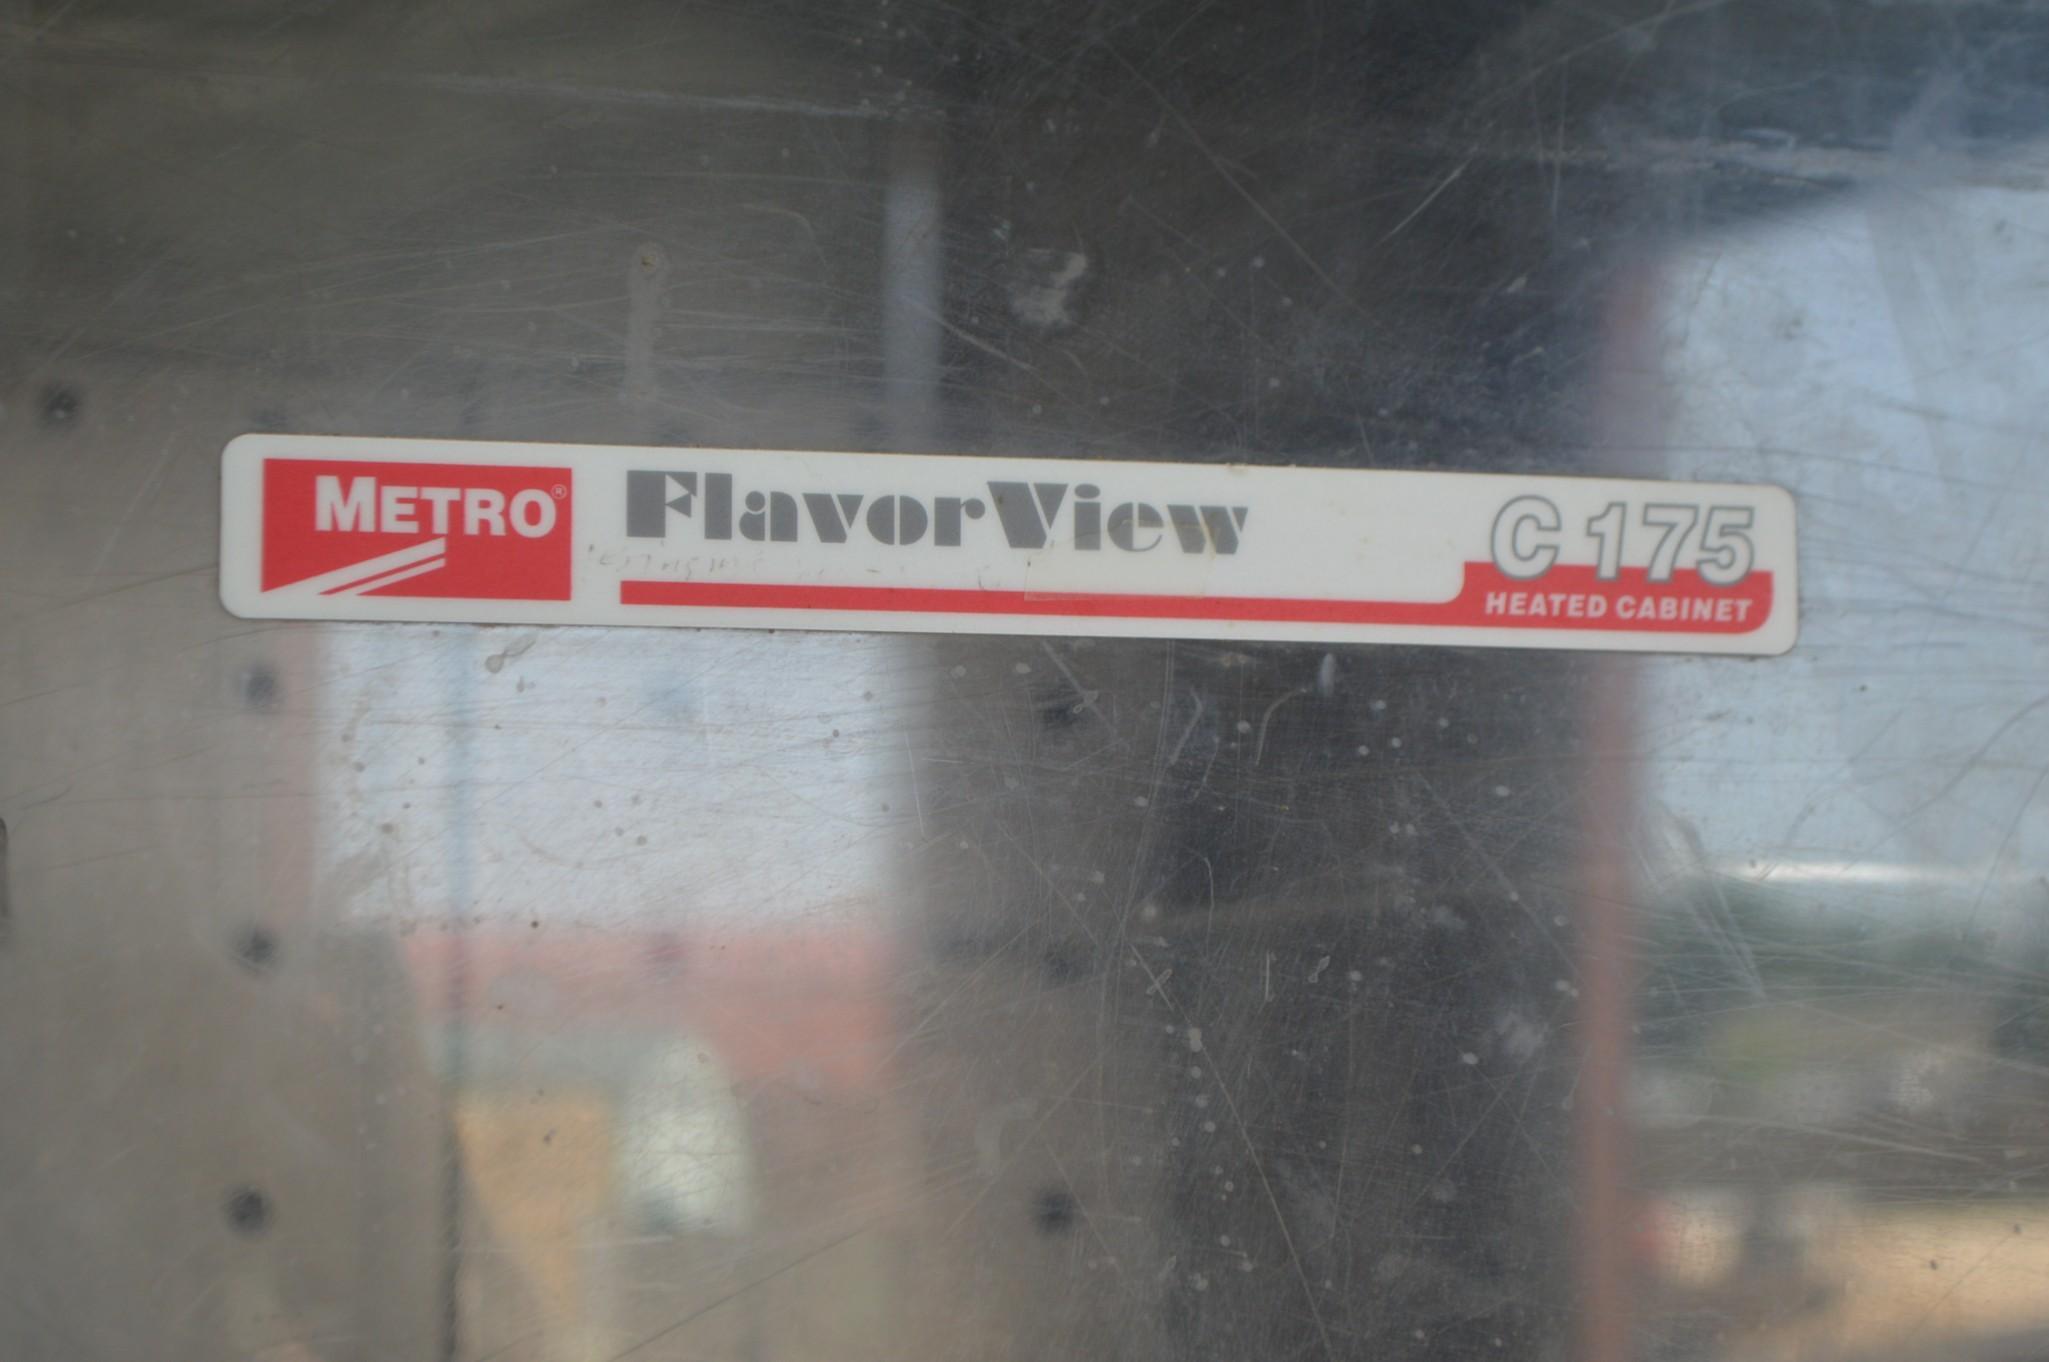 Metro Flavor View C175 Commercial Kitchen/Restaurant Heated Cabinet